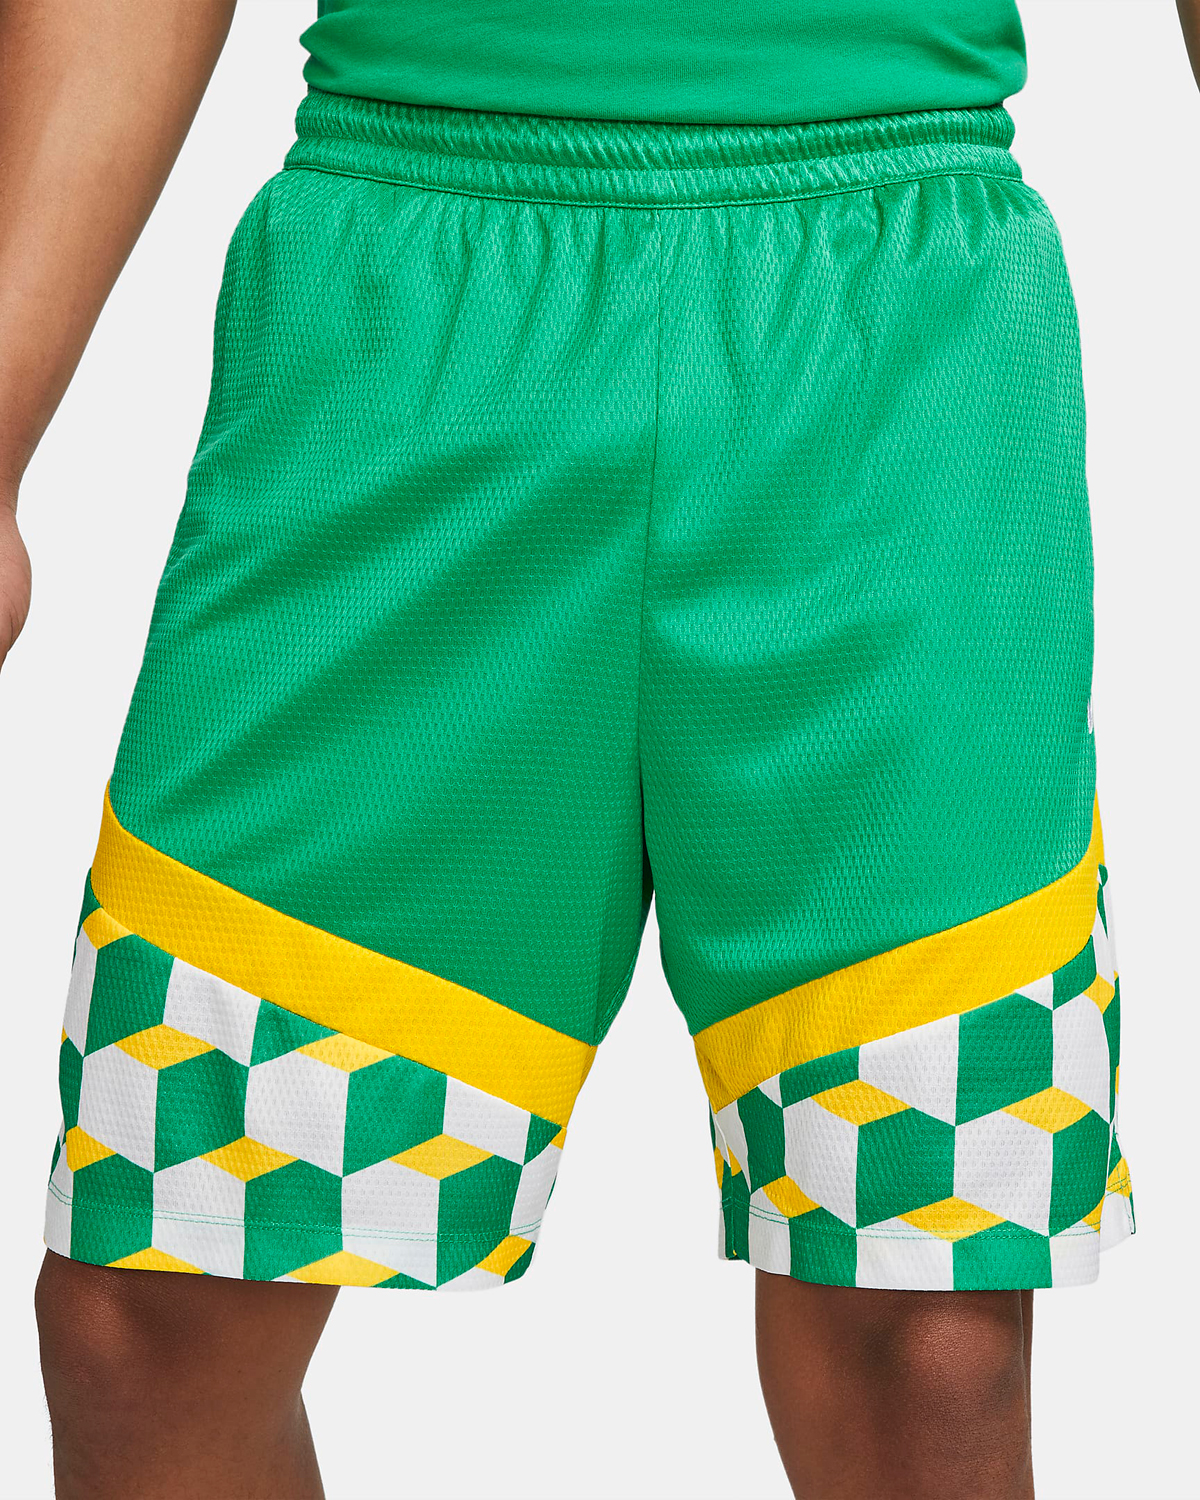 Nike-Icon-Basketball-Shorts-Stadium-Green